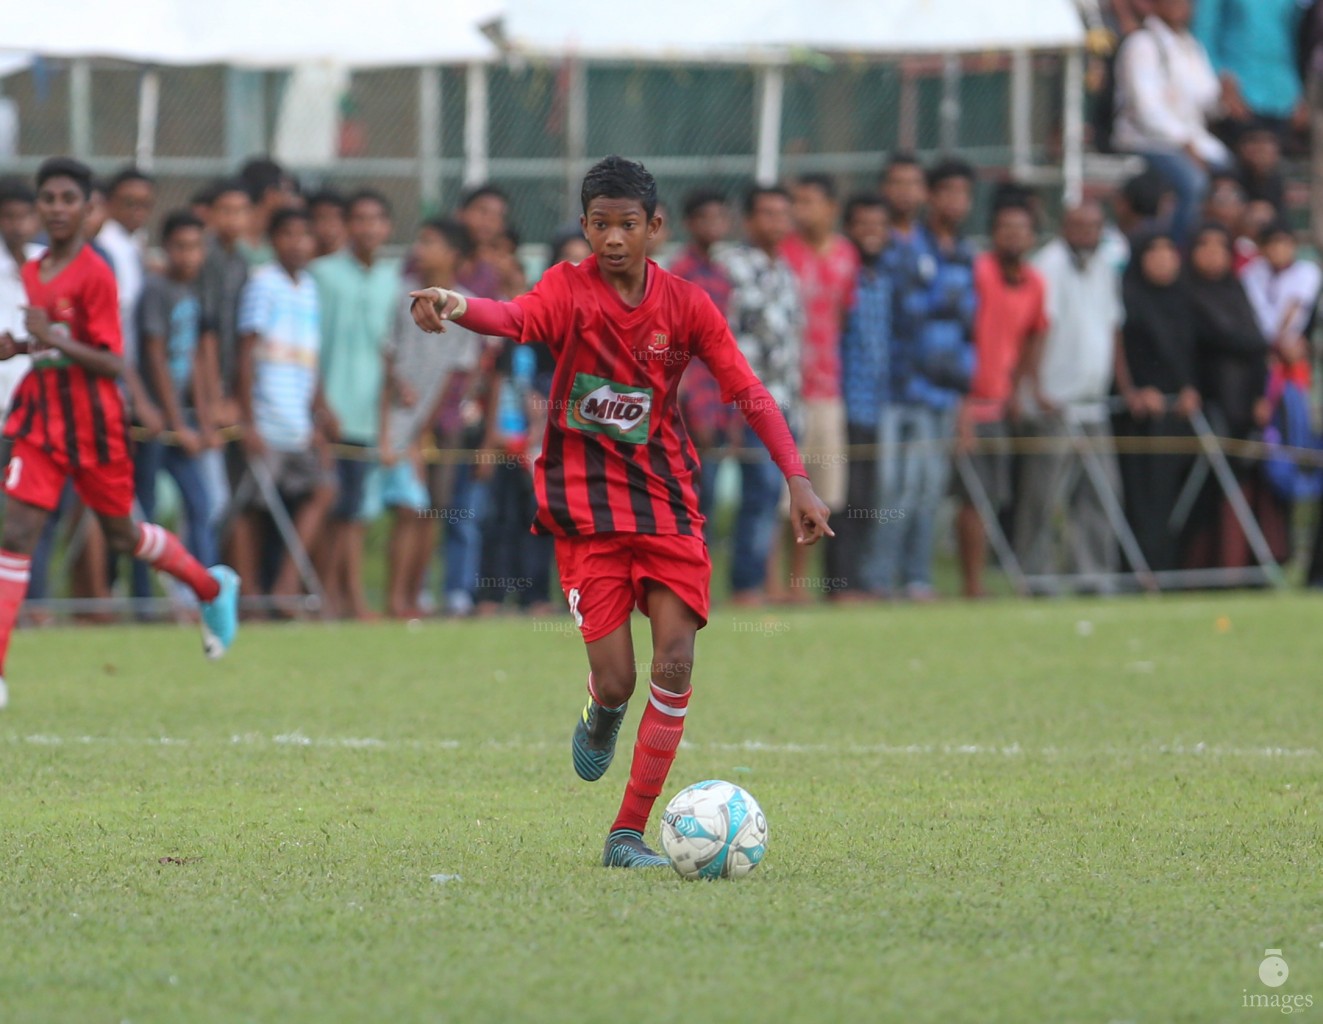 Milo Inter-school U14 Football - Majeedhiyya School vs Arabiya School  